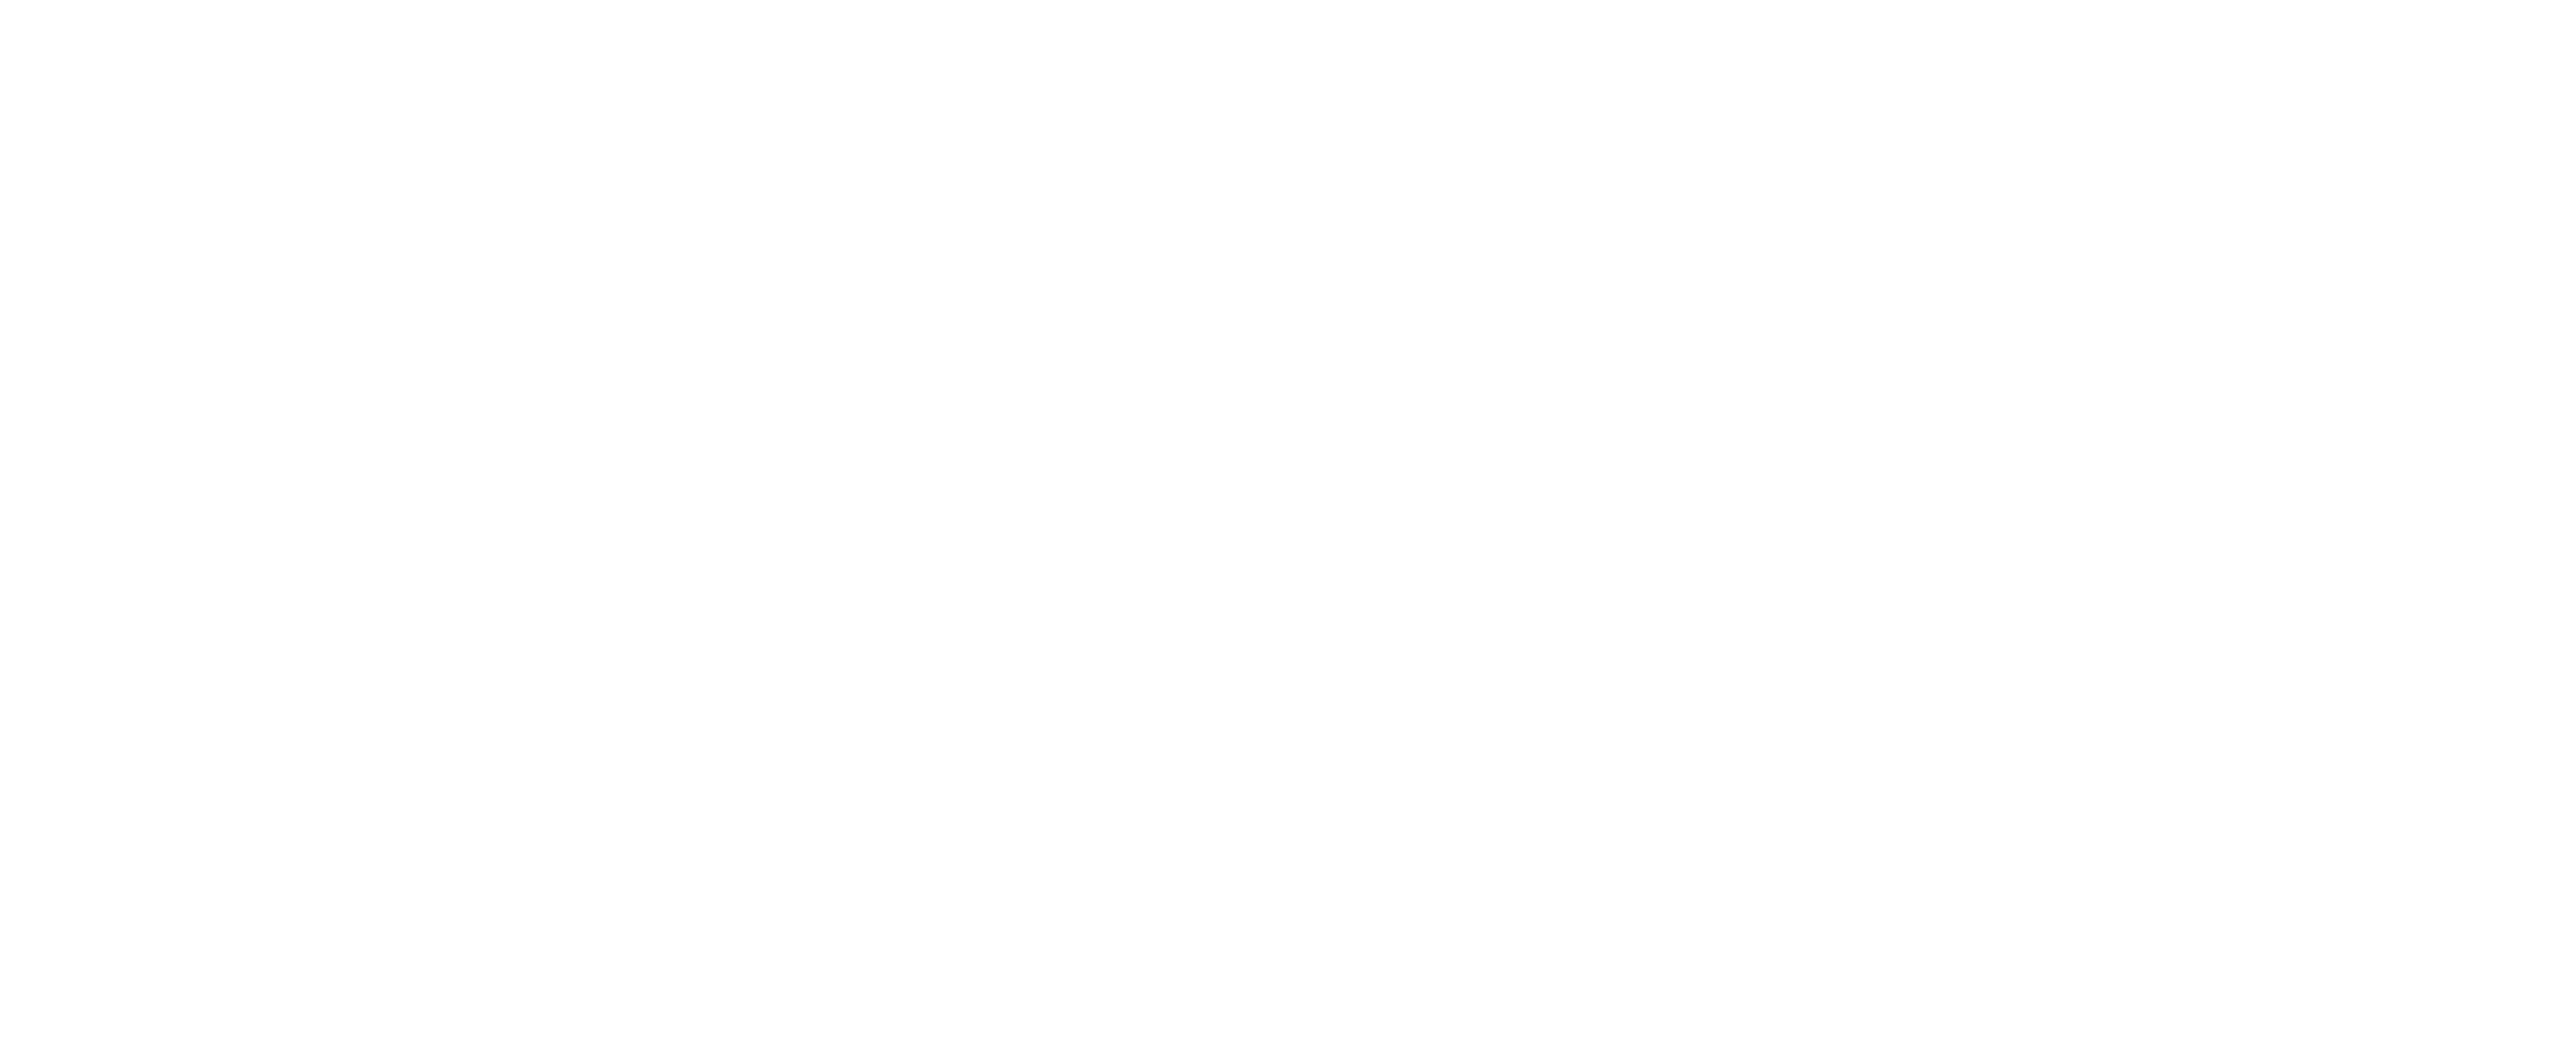 Pathways to Success Sponsorship info (2)